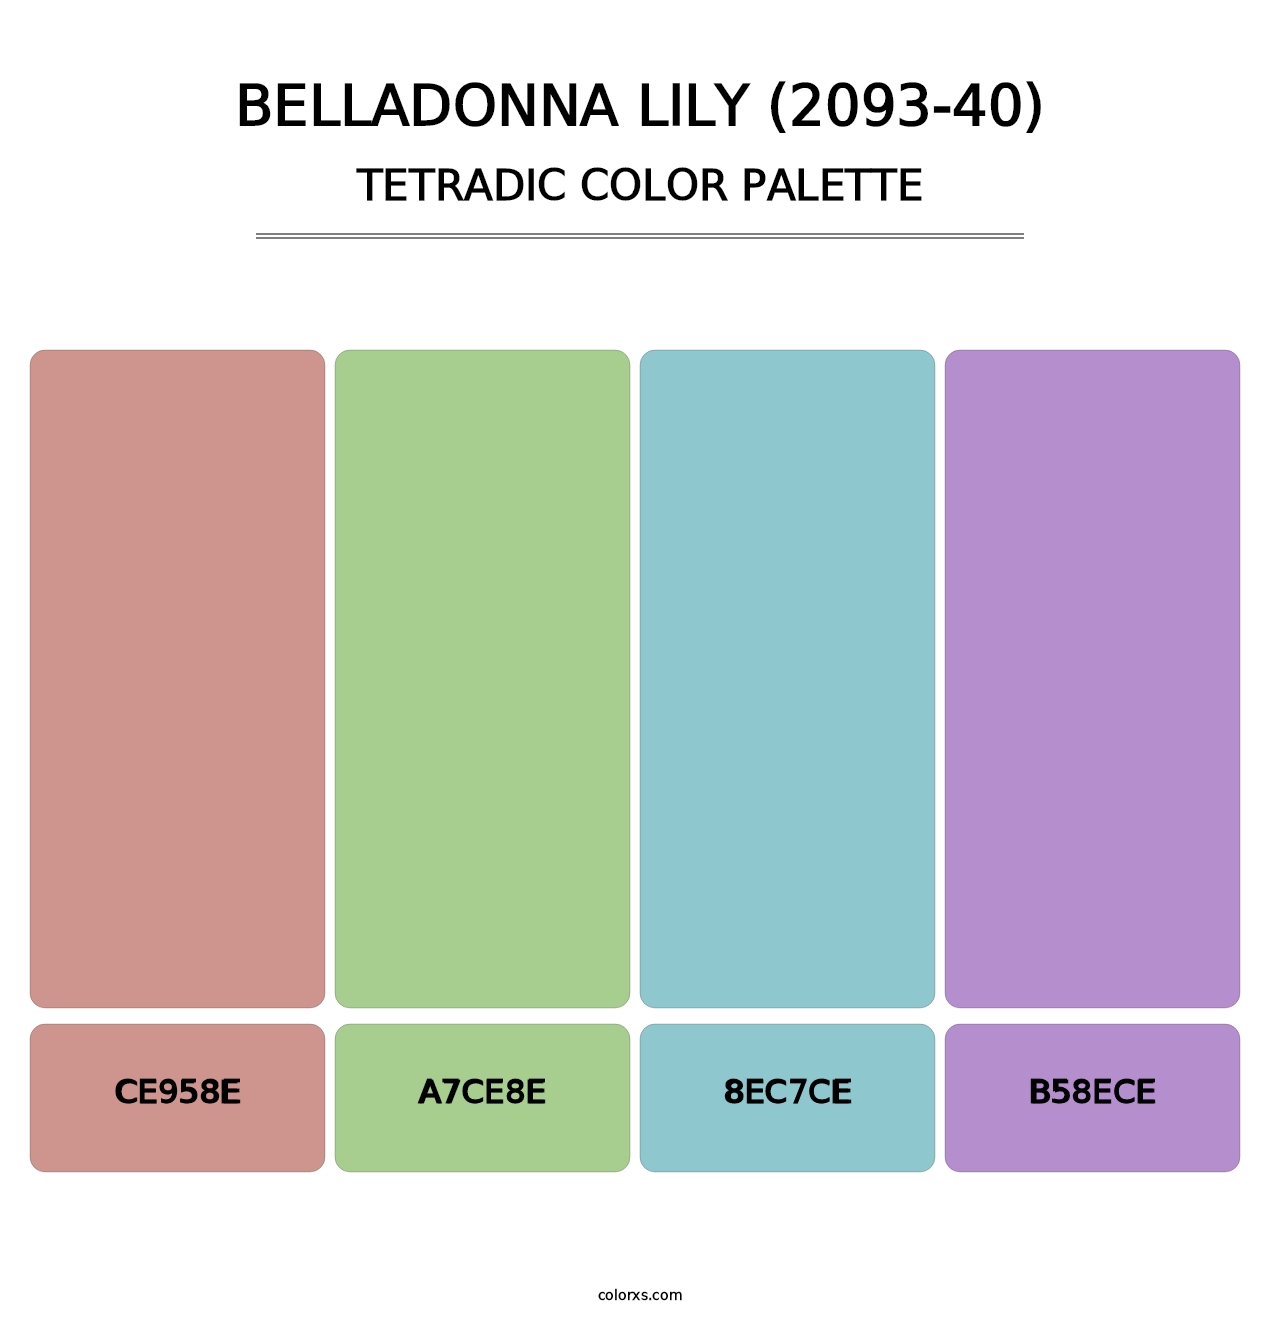 Belladonna Lily (2093-40) - Tetradic Color Palette